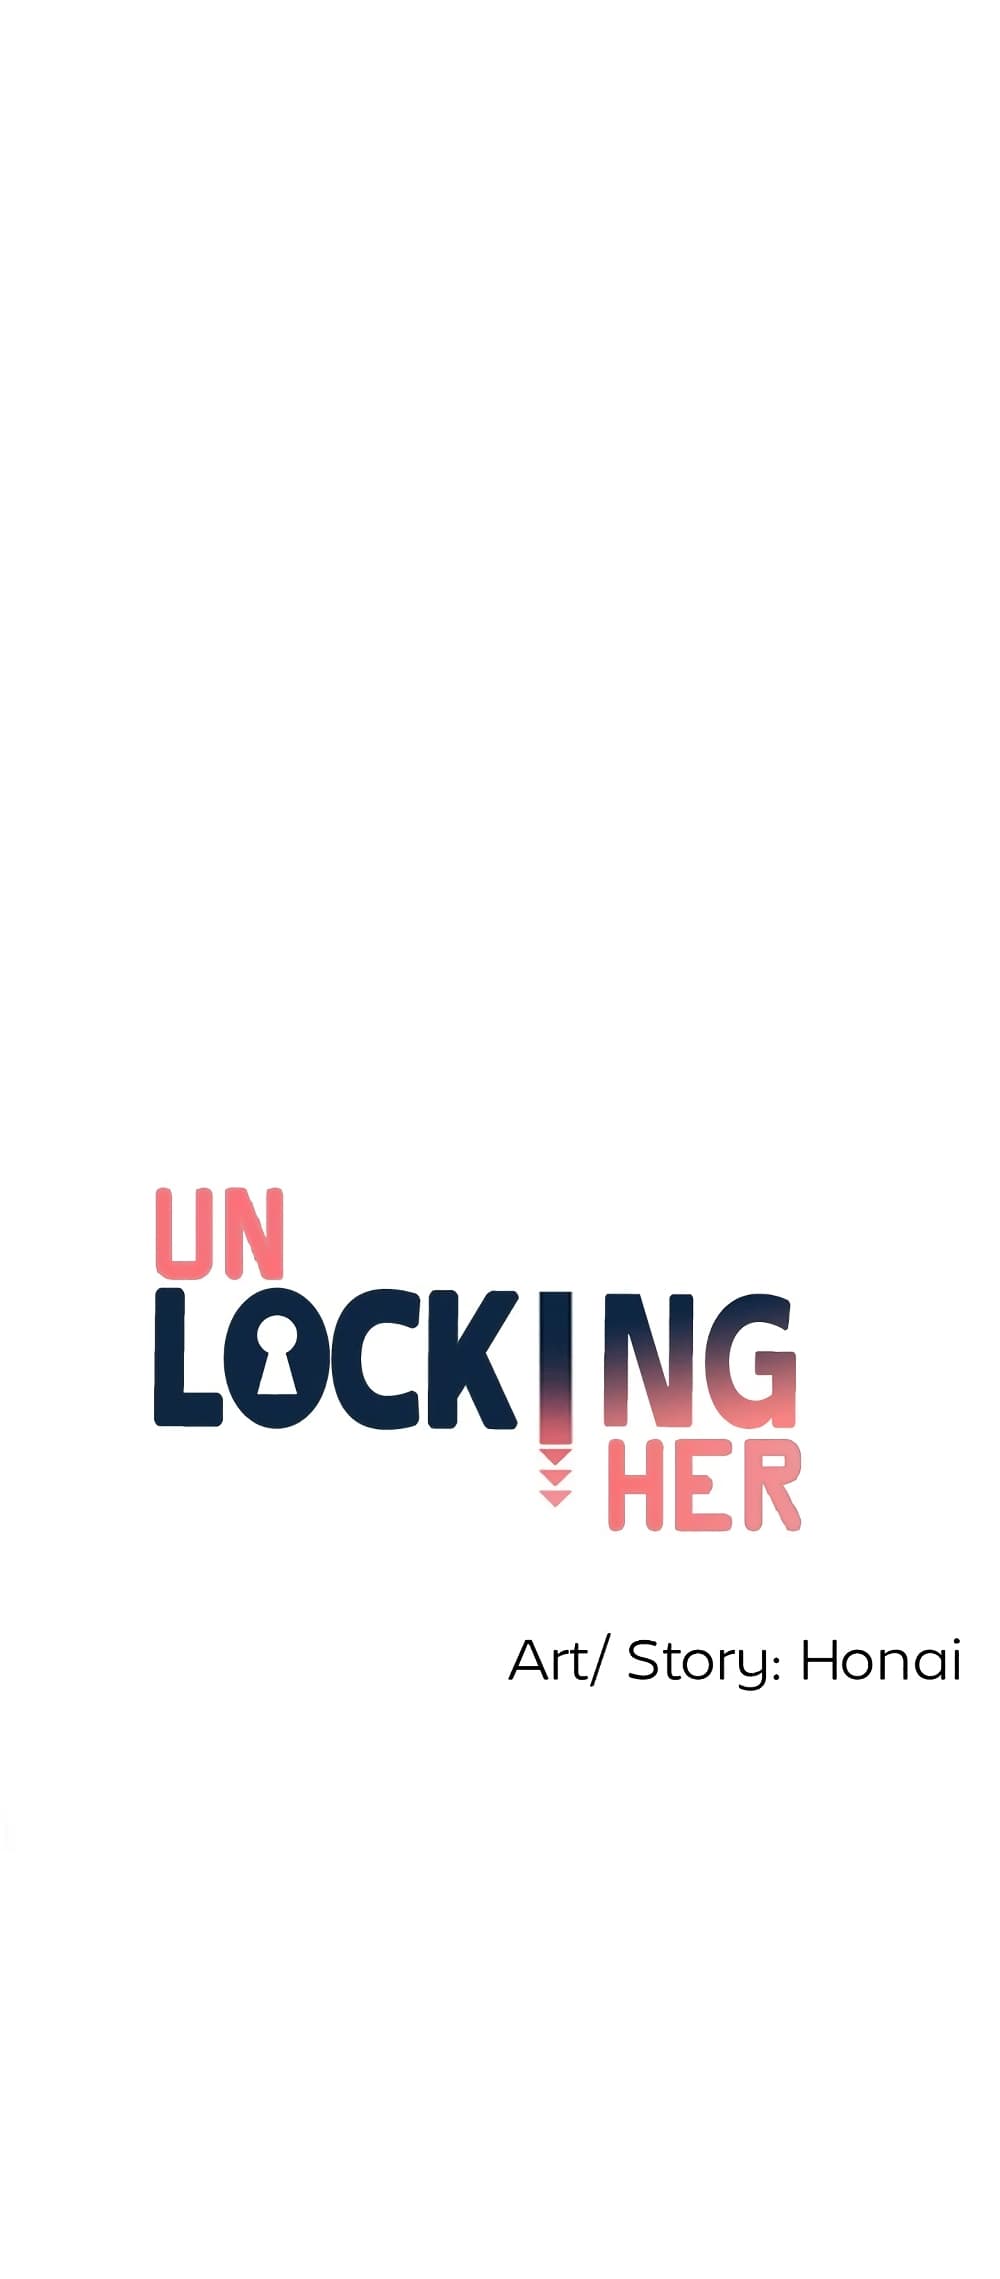 Unlock Her Heart 4-4